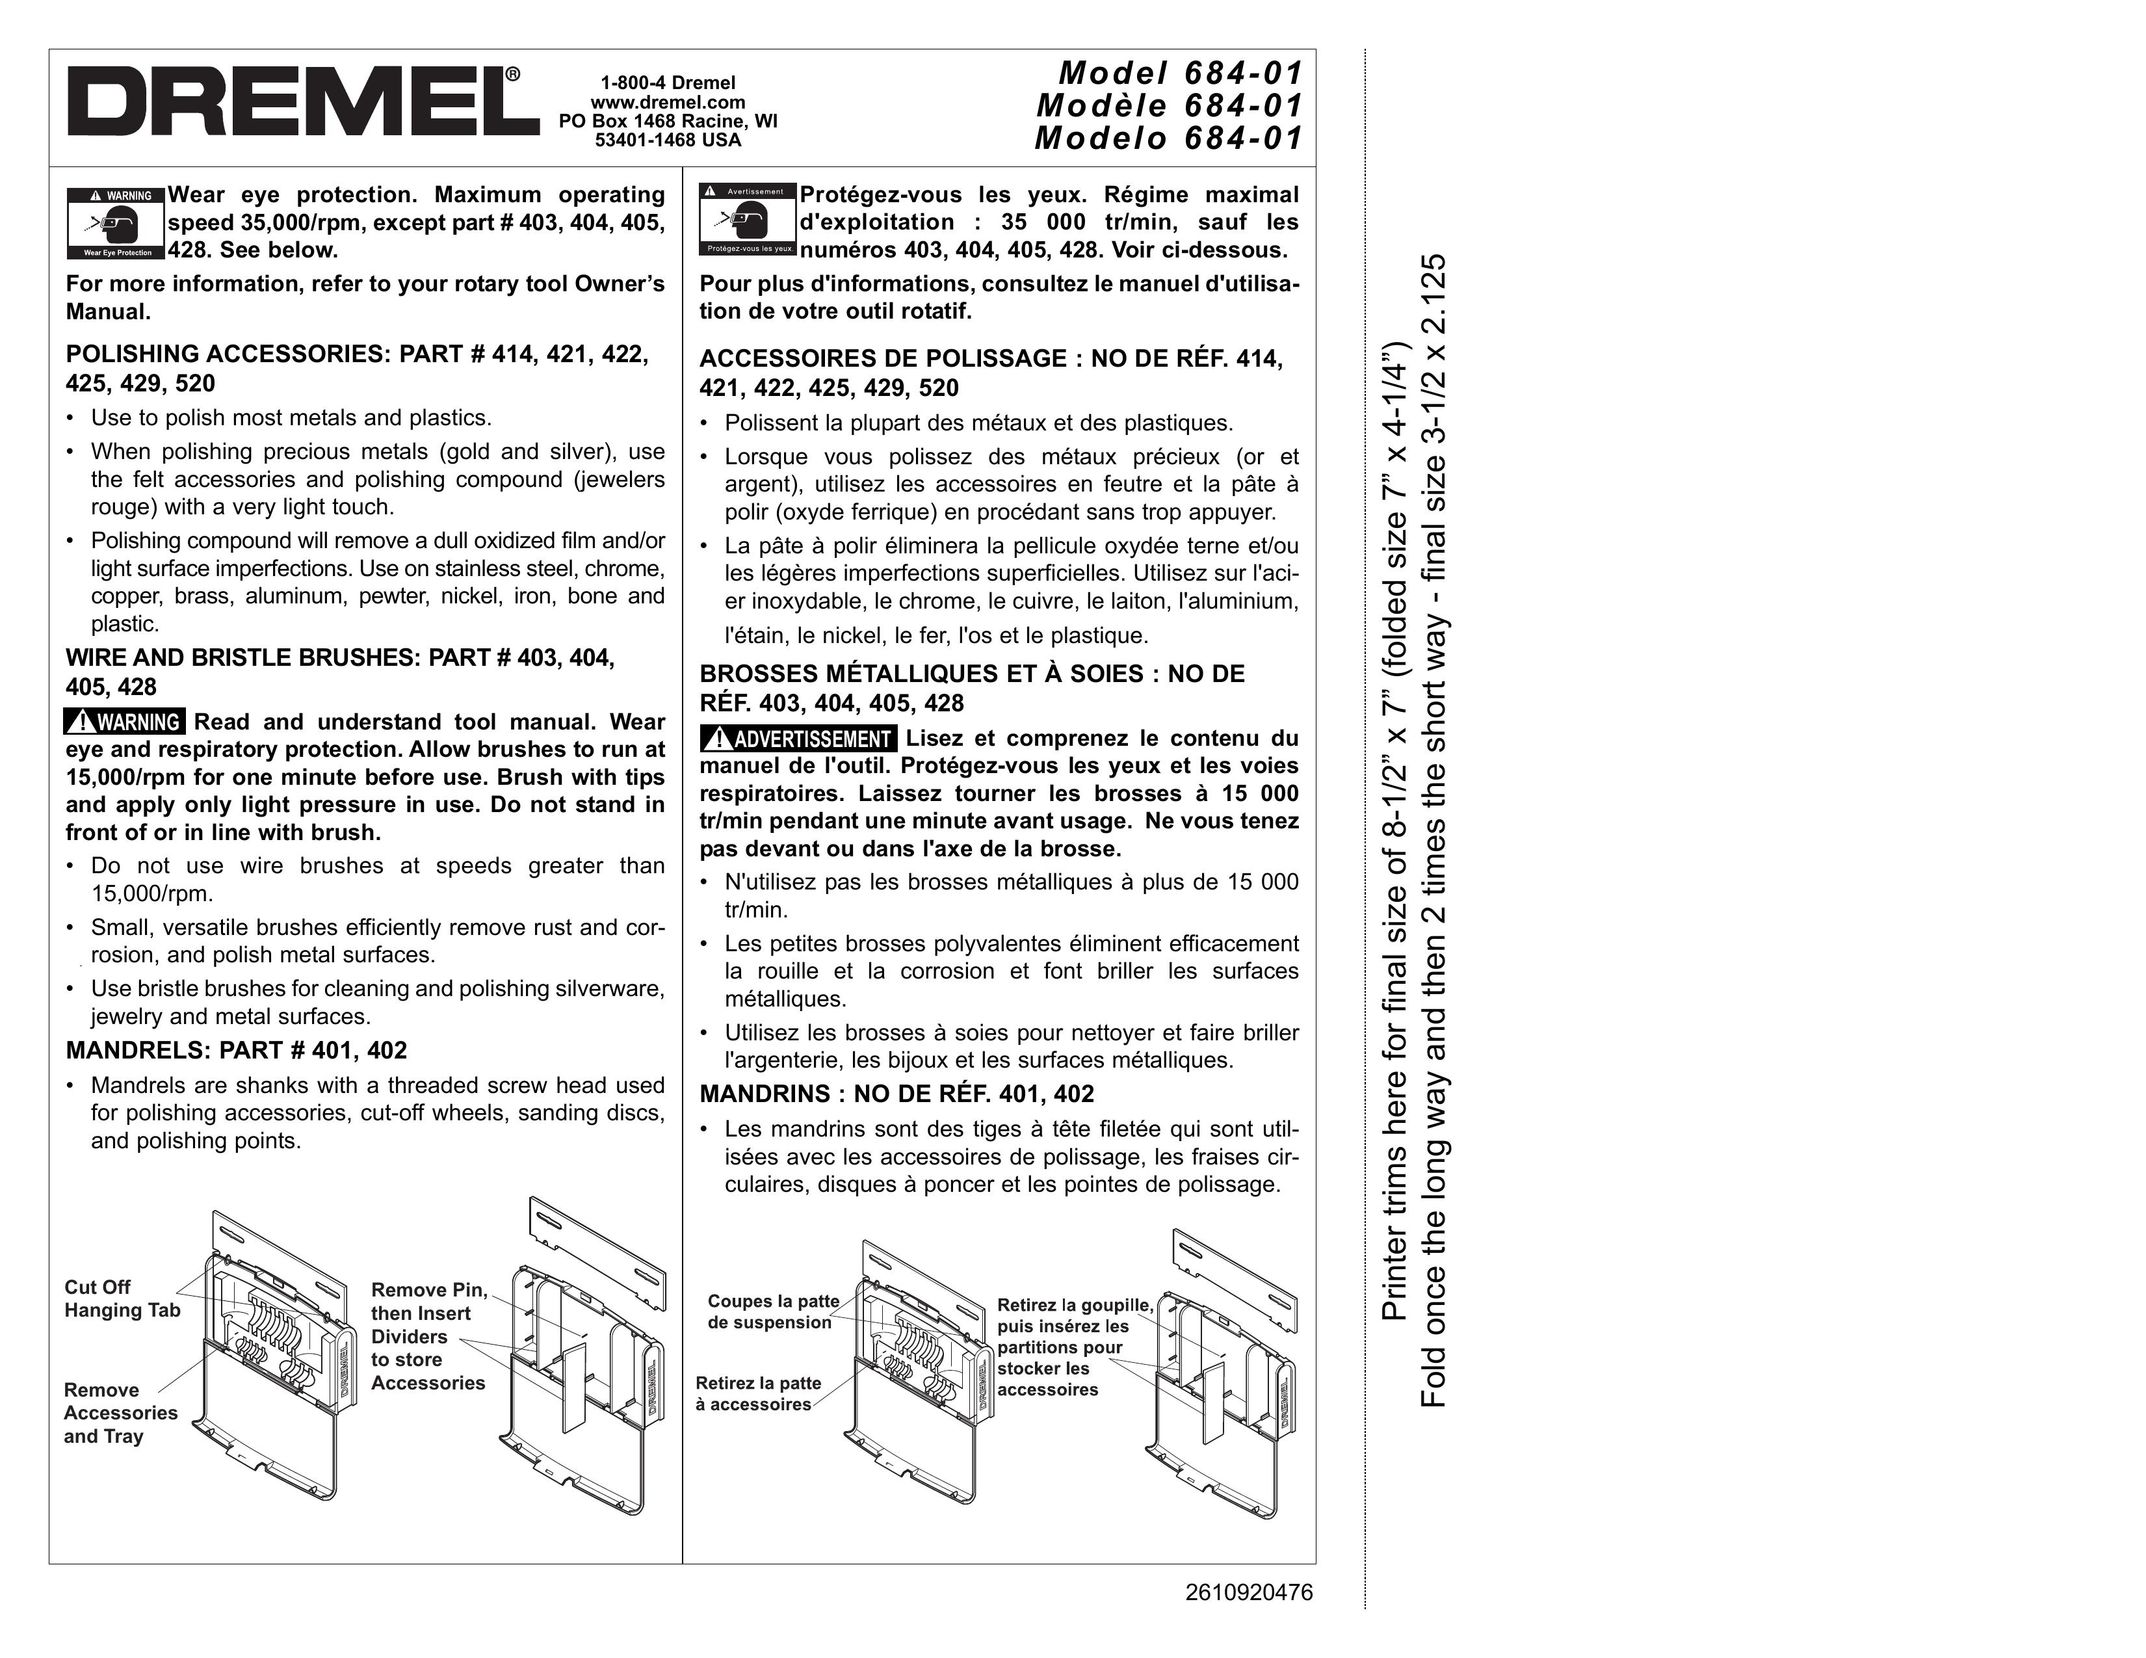 Dremel 684-01 Sander User Manual